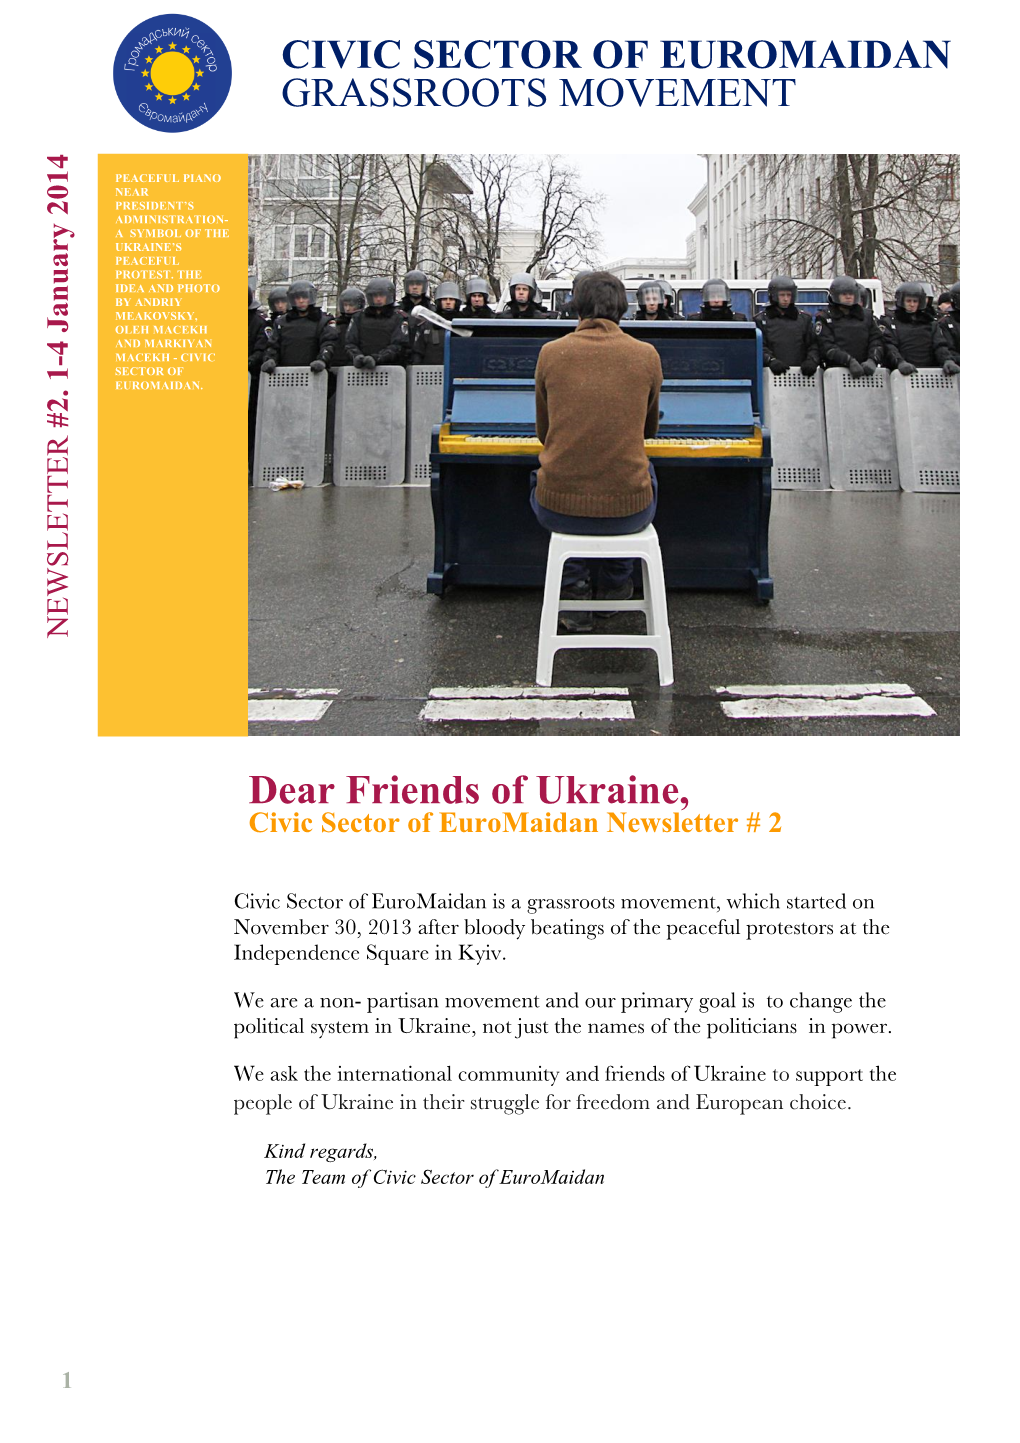 Dear Friends of Ukraine, Civic Sector of Euromaidan Newsletter # 2